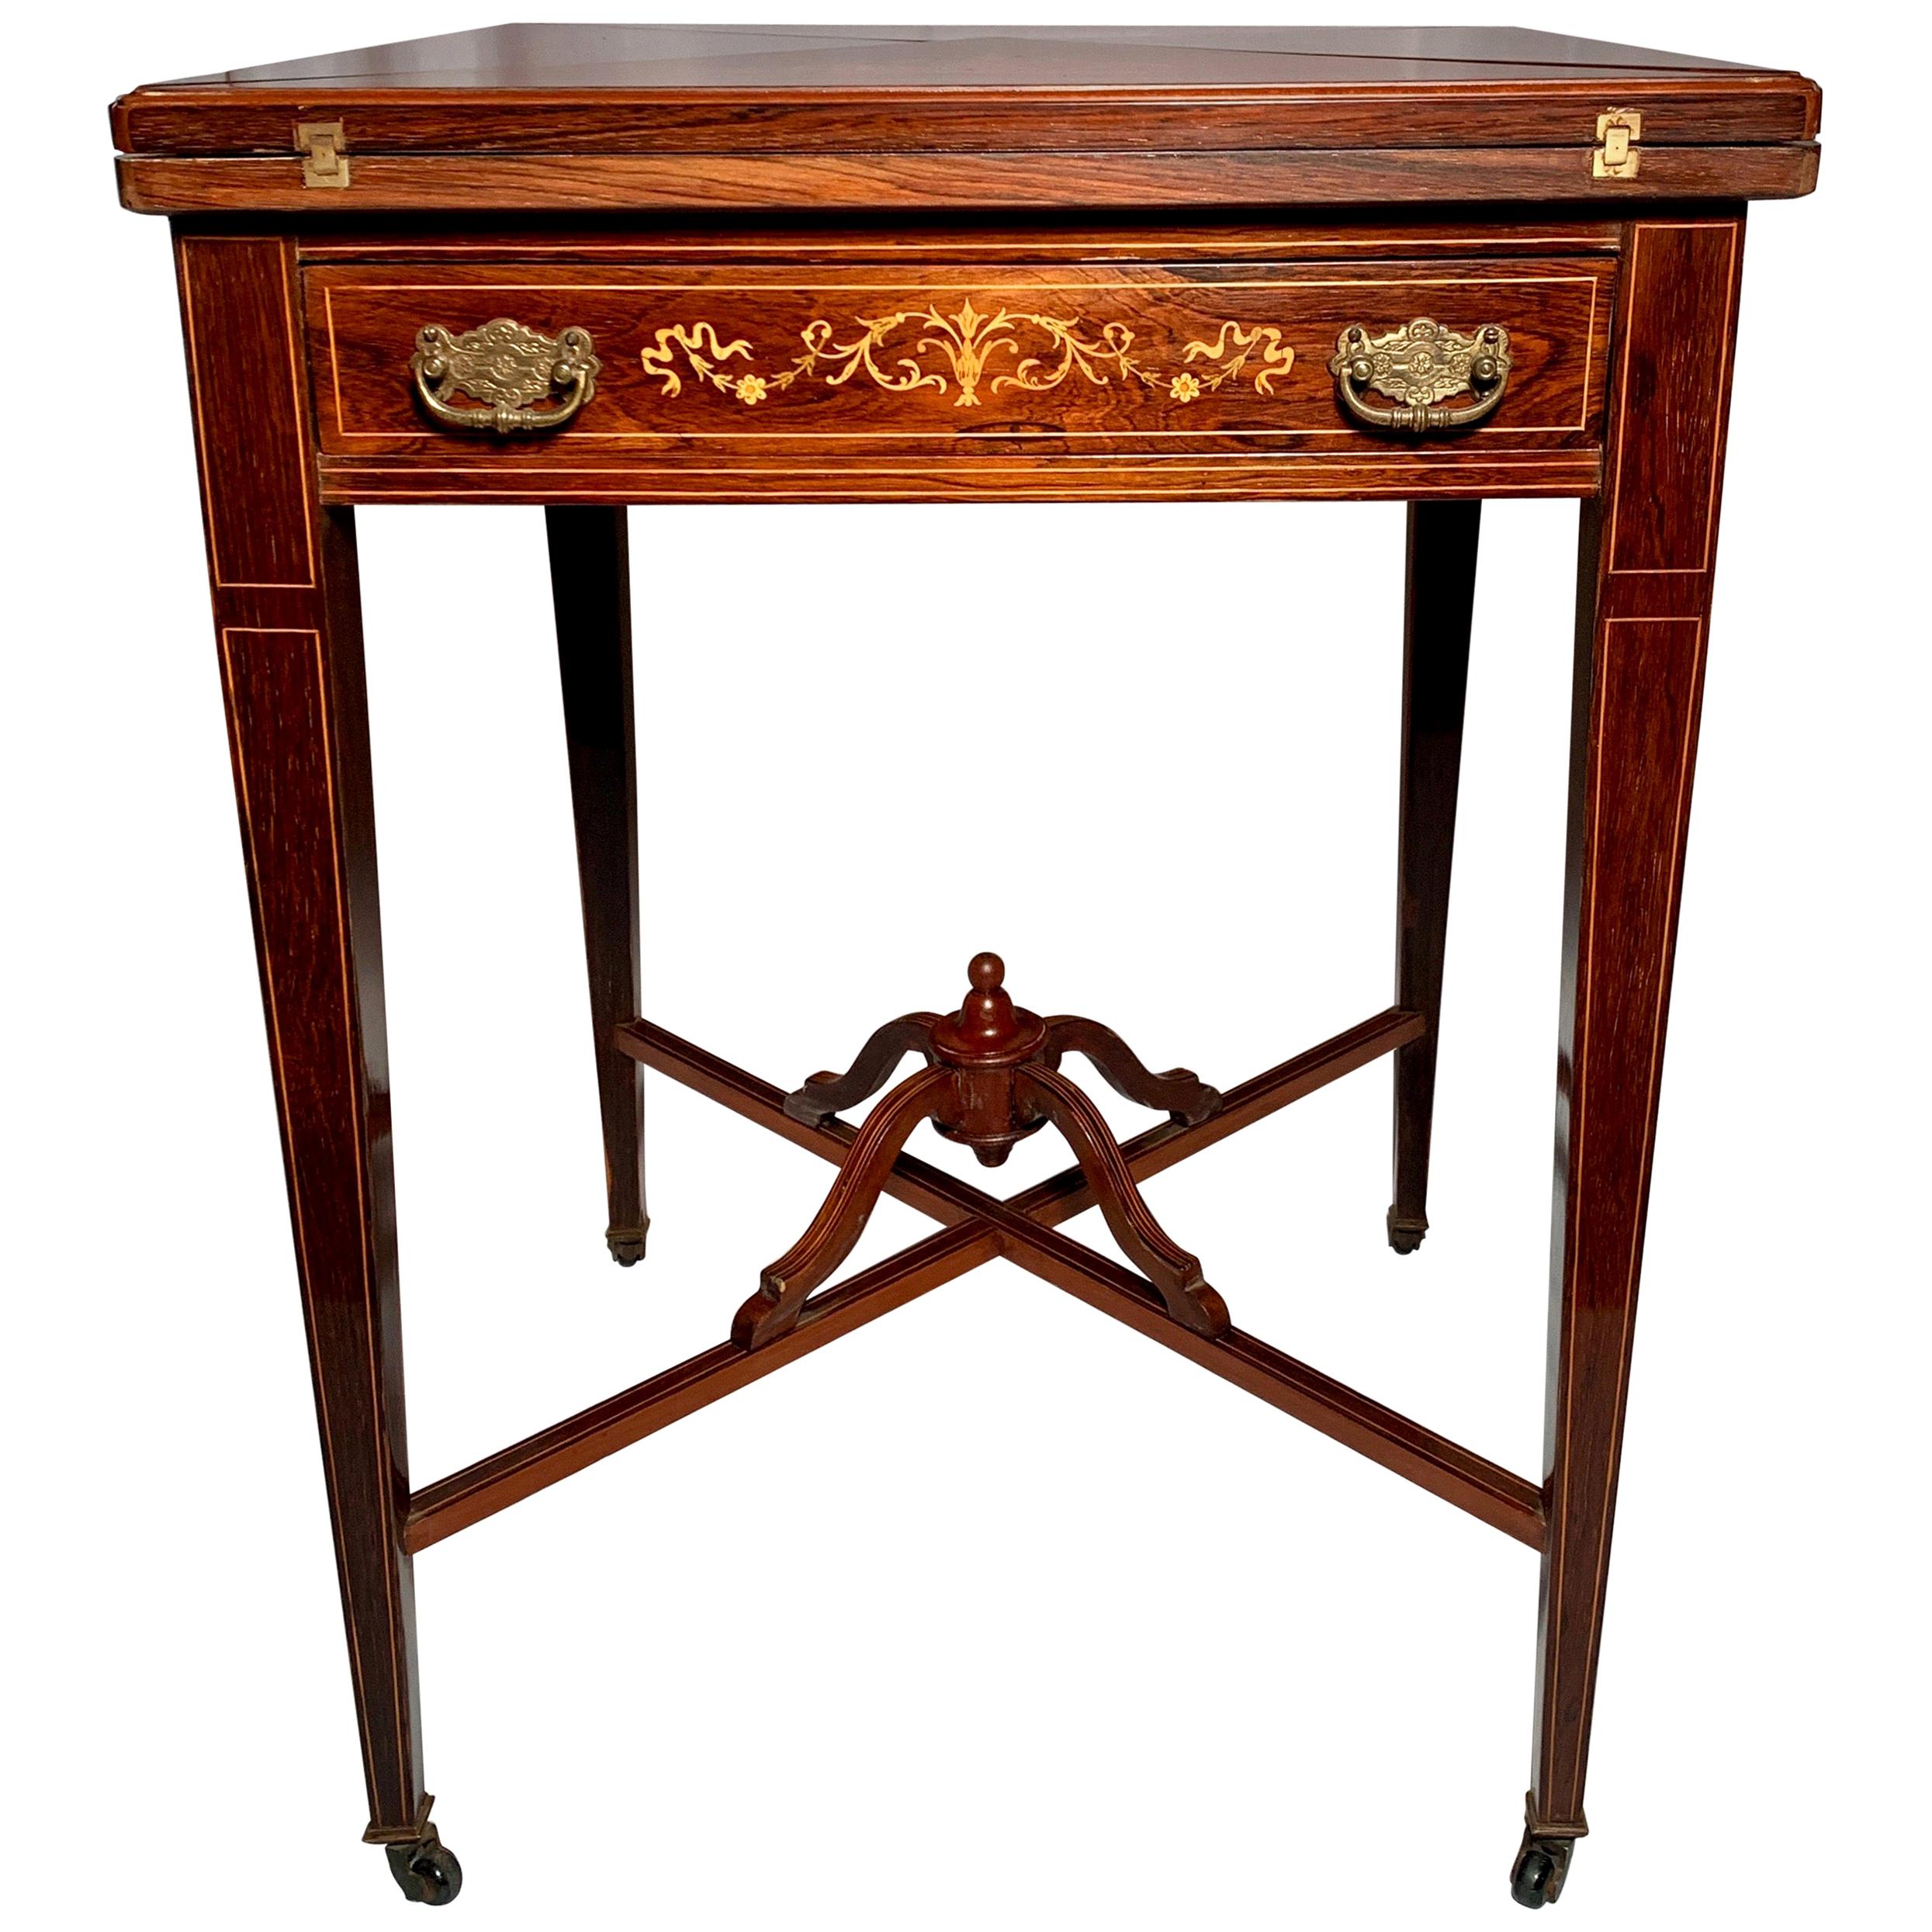 Antique English Rosewood Handkerchief Table, circa 1880